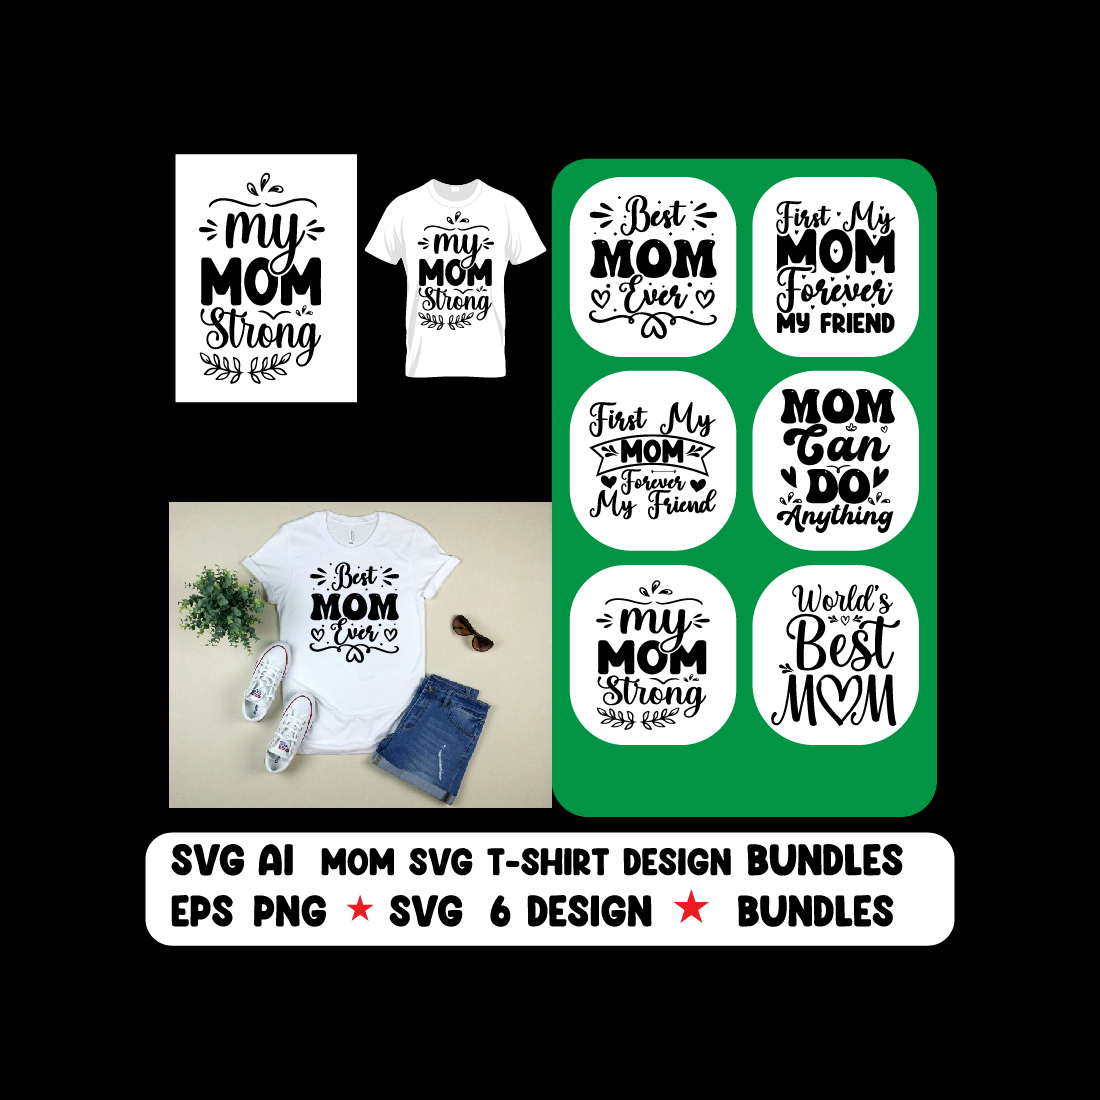 Mom t-shirt design typography & SVG design preview image.